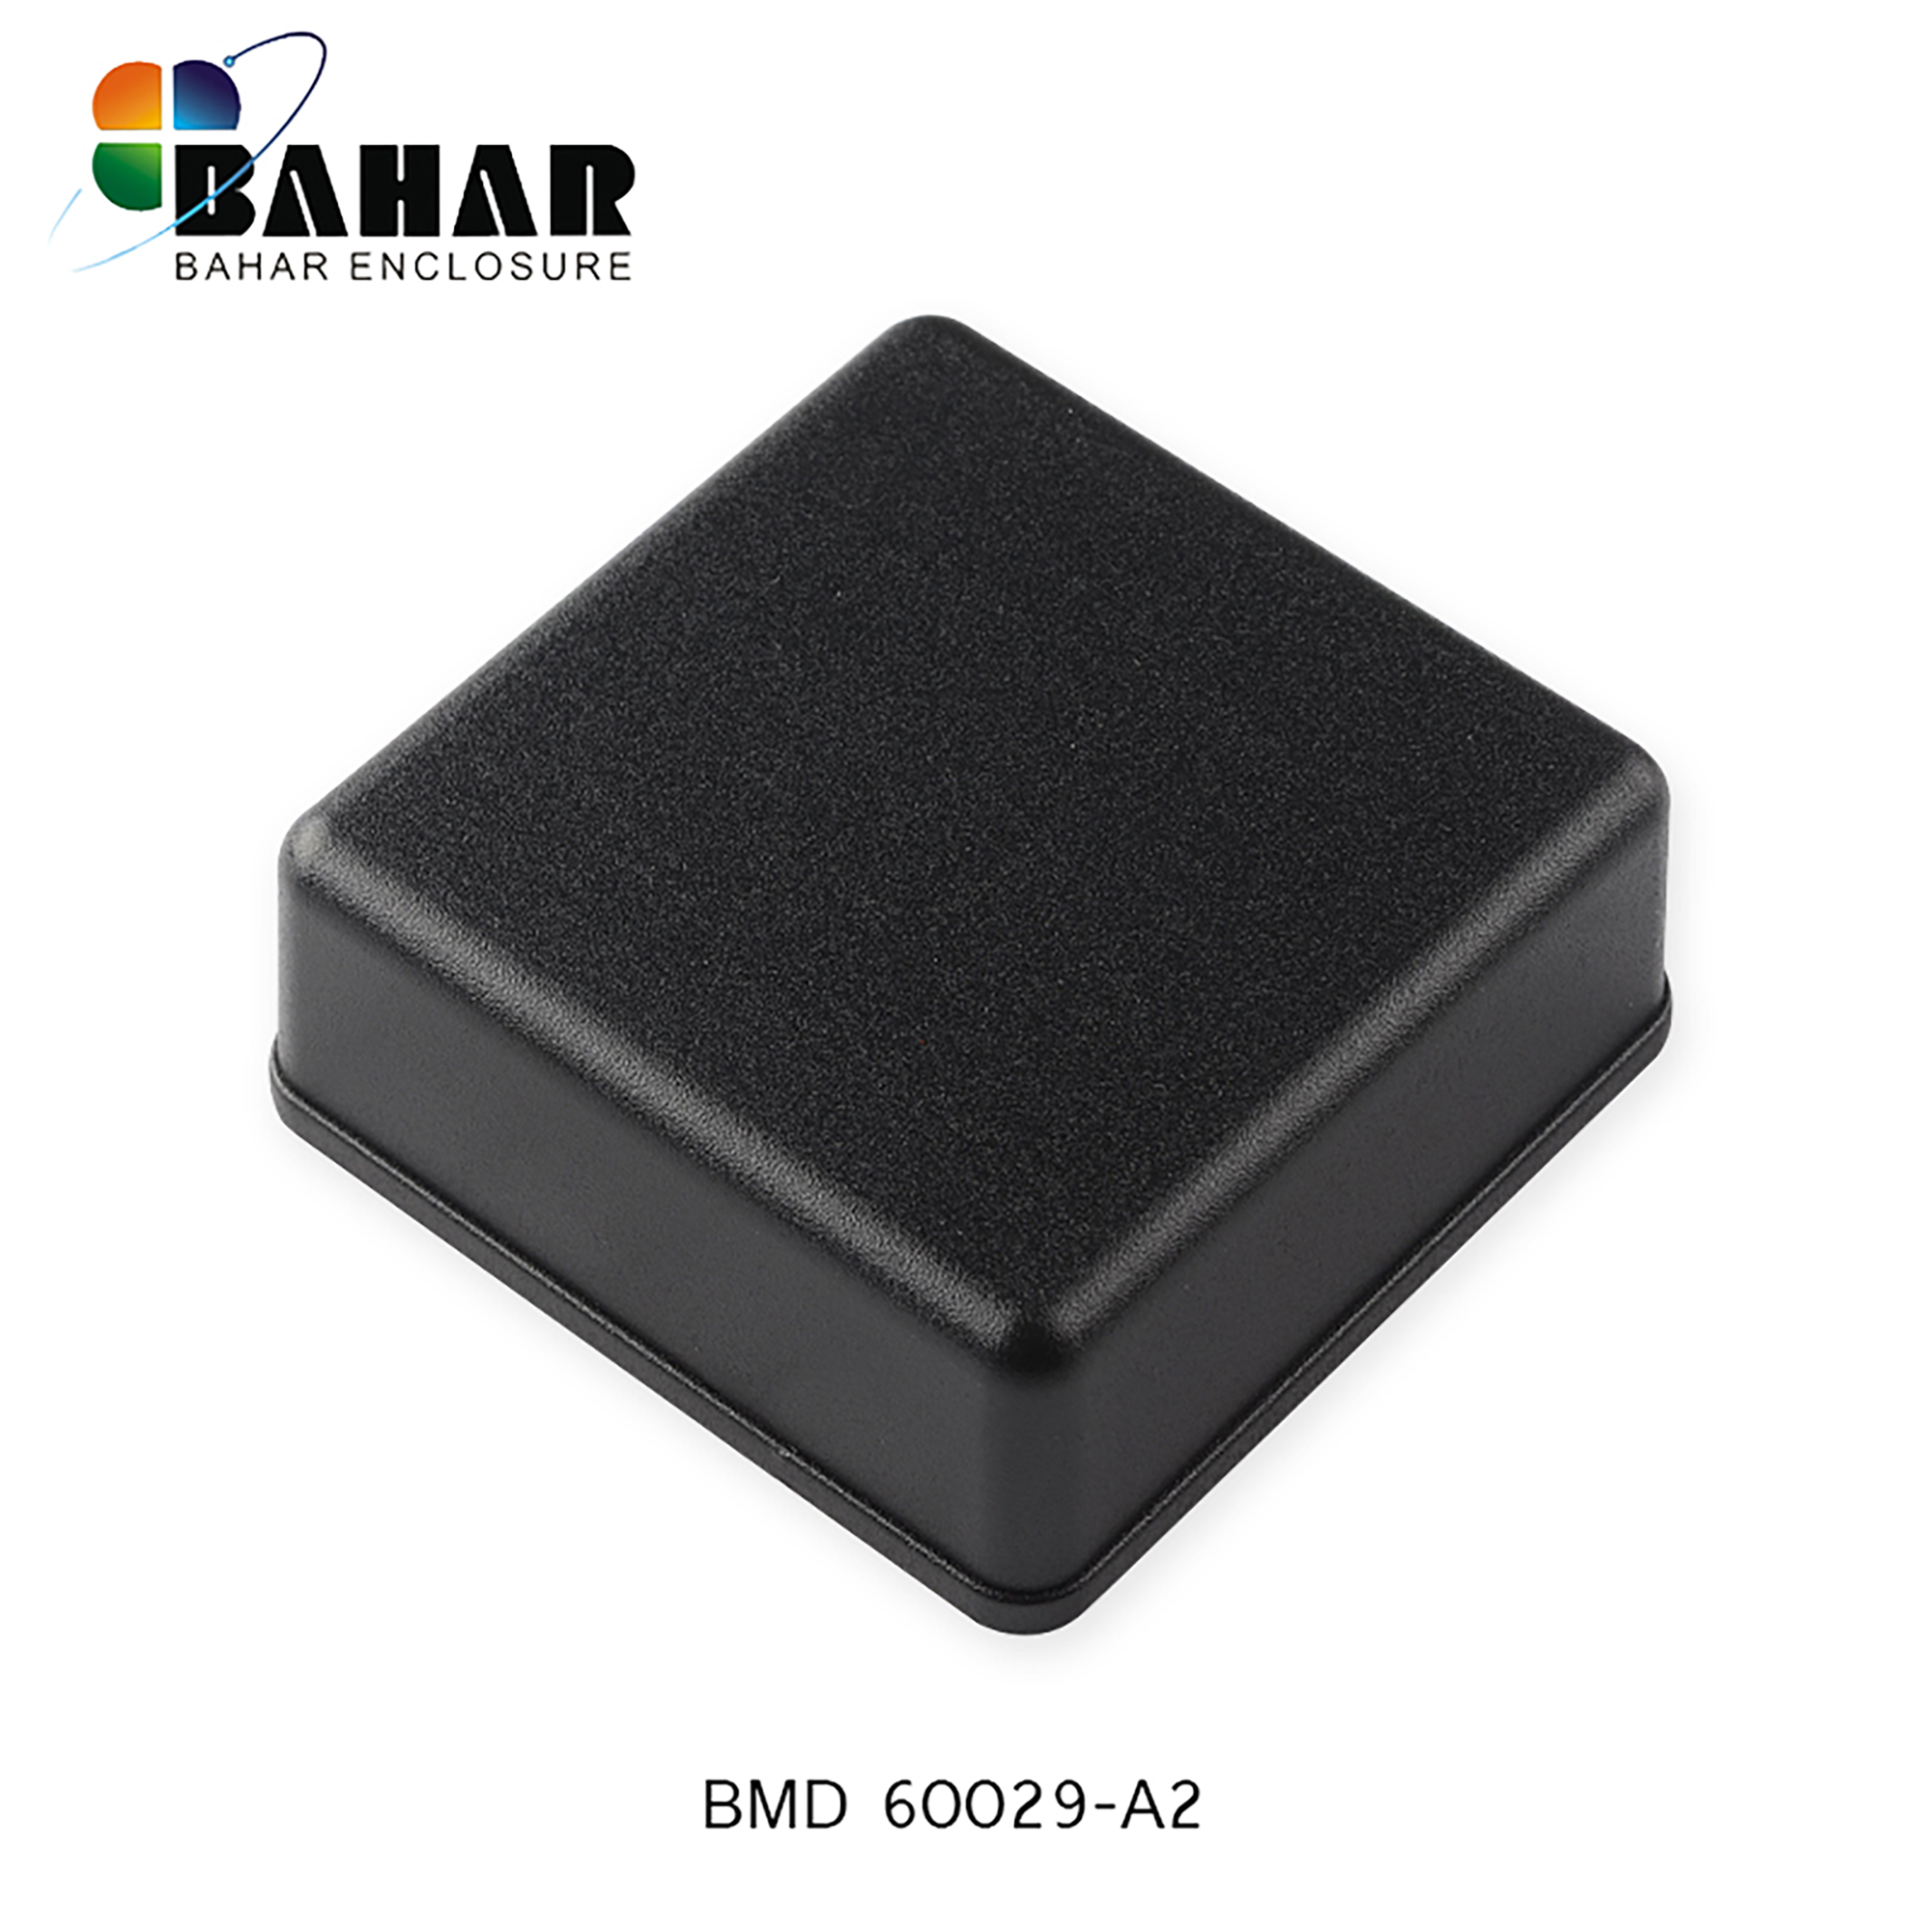 BMD 60029 | 51 x 51 x 20 mm